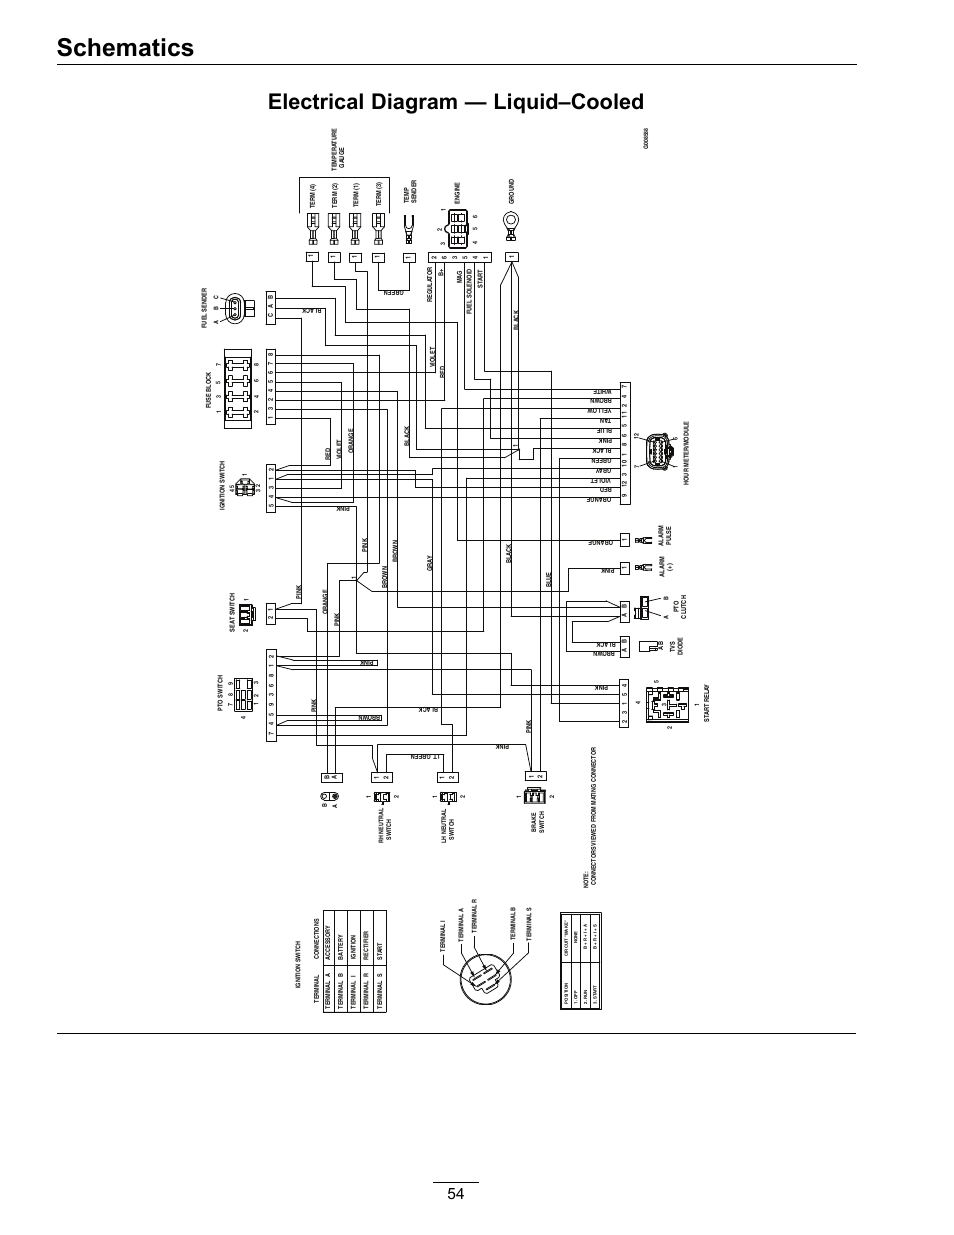 Schematics, Electrical diagram — liquid–cooled | Exmark Lazer Z